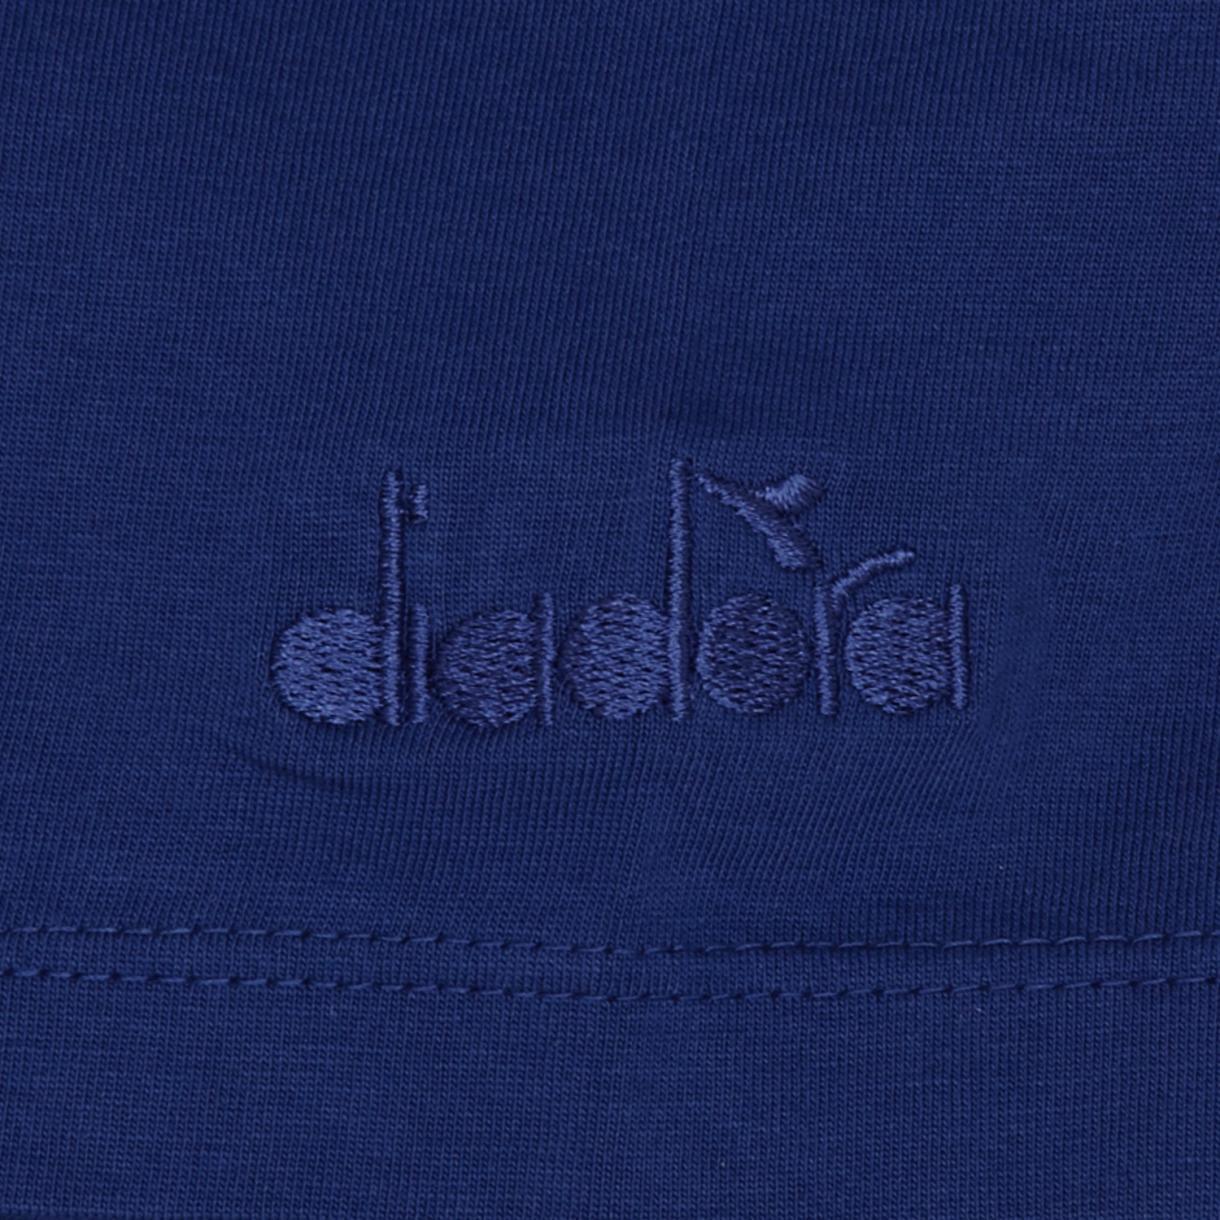 Five Ball Diadora Logo - Diadora Mens T-SHIRT SS BL Navy, Blue T-Shirts And Tank Tops ...